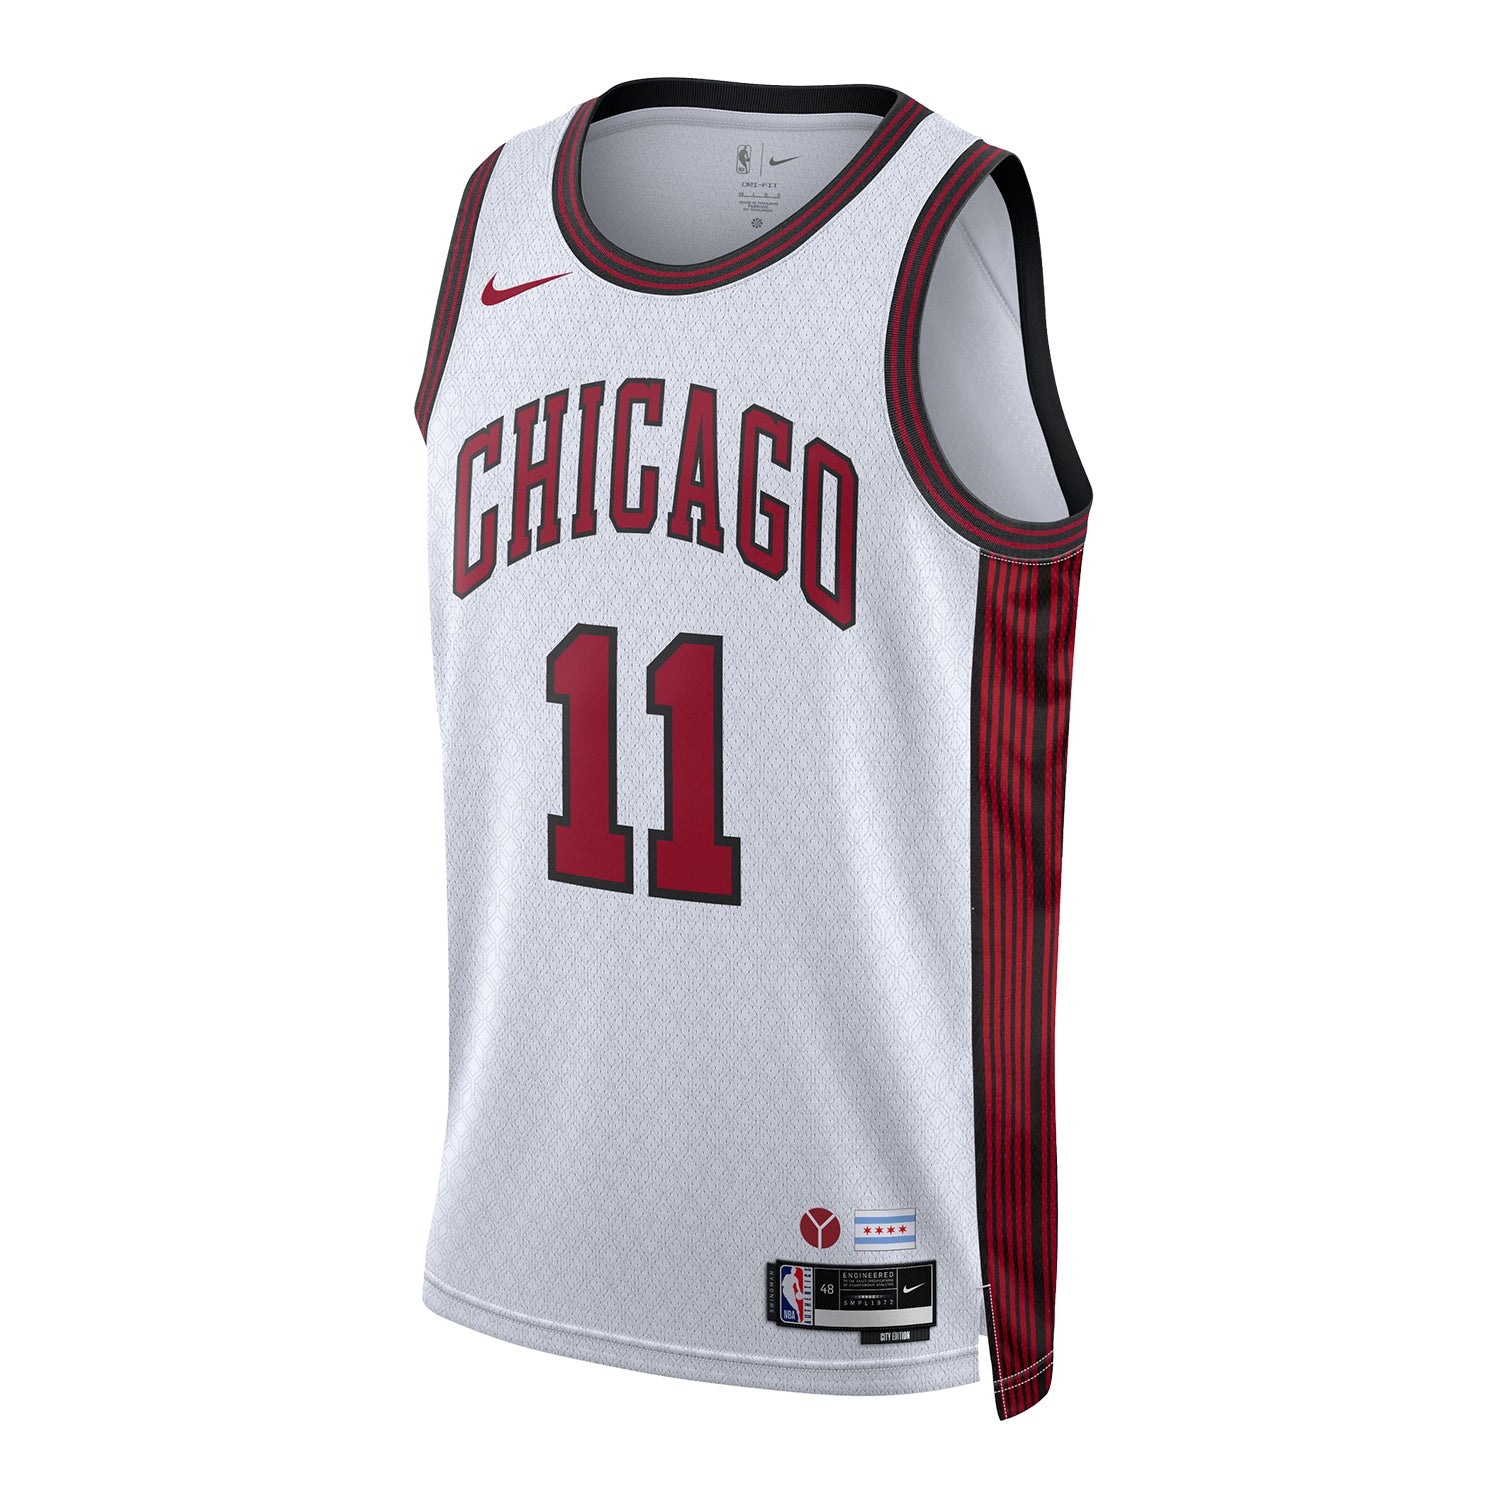 Nike, Shirts & Tops, Chicago Bulls Michael Jordan Jersey Stitched